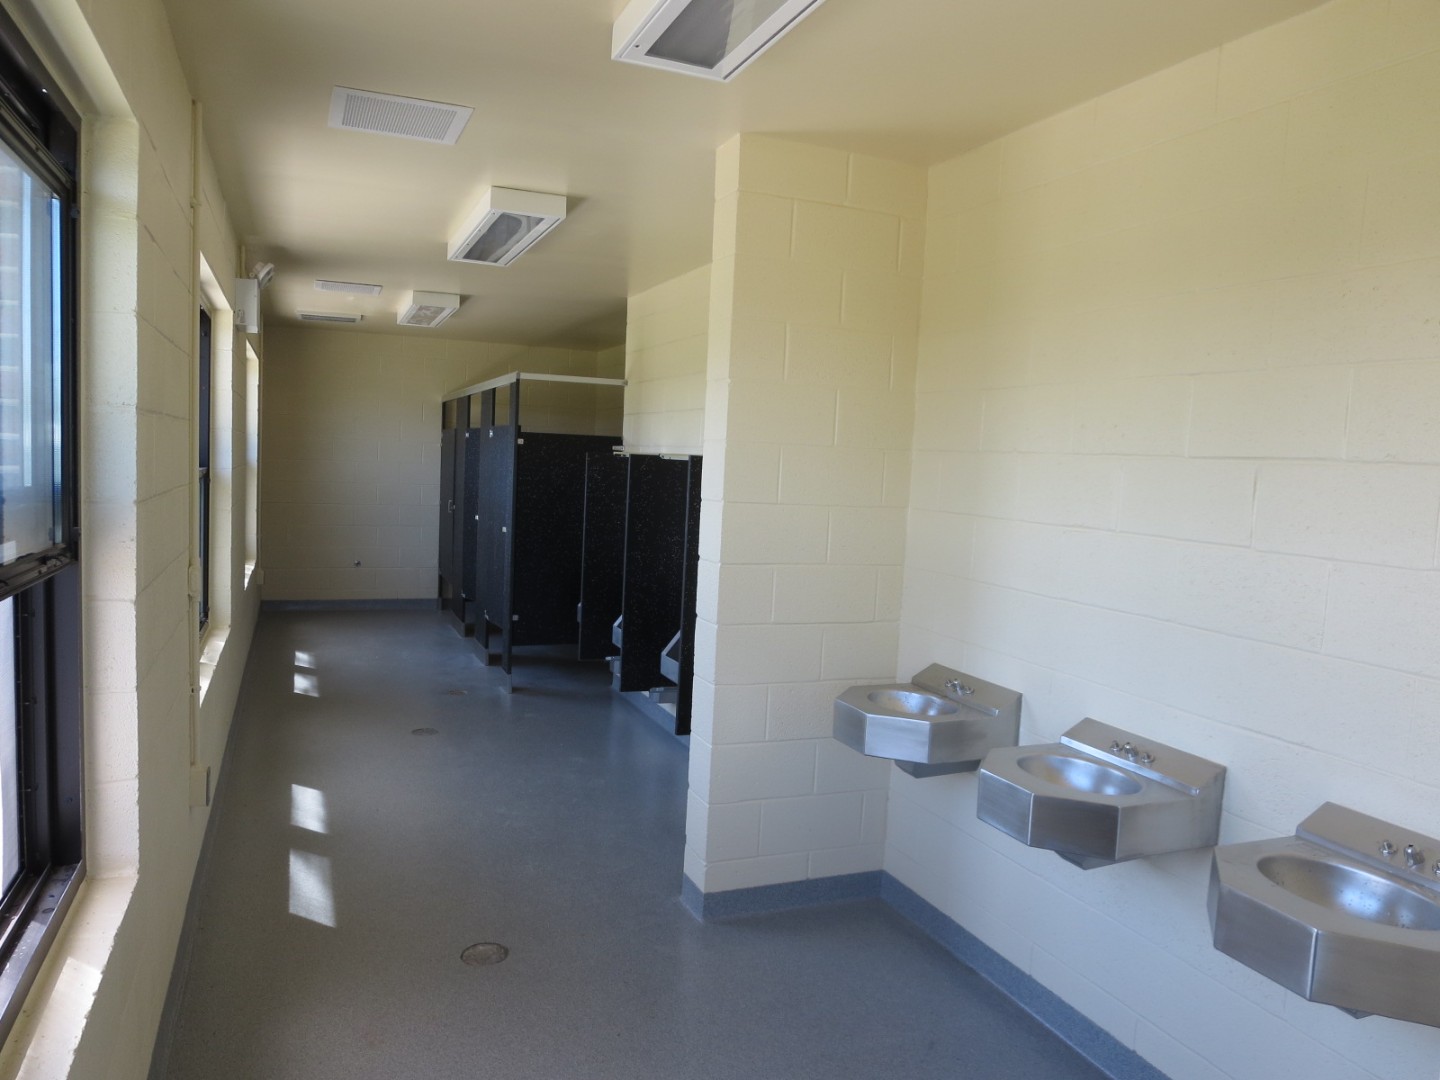 woodbourne correctional facility